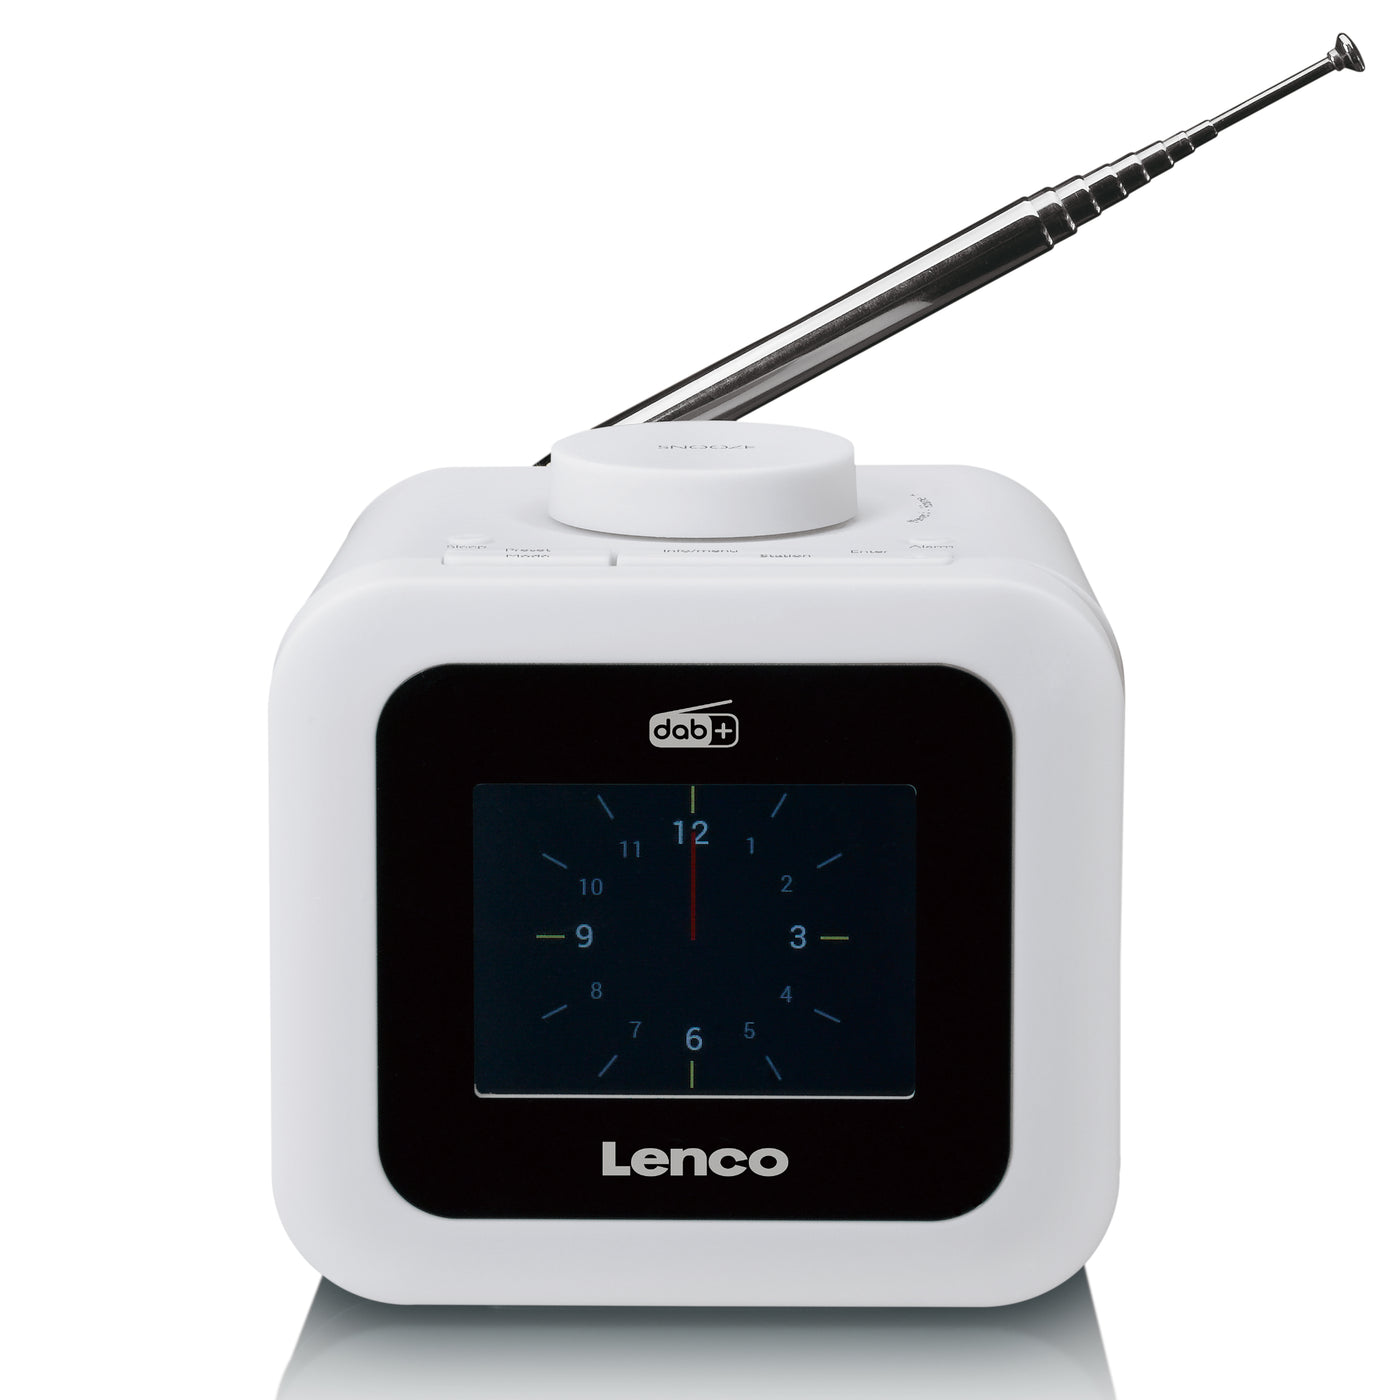 LENCO CR-620WH - DAB+/FM Clock Radio with colour display - White